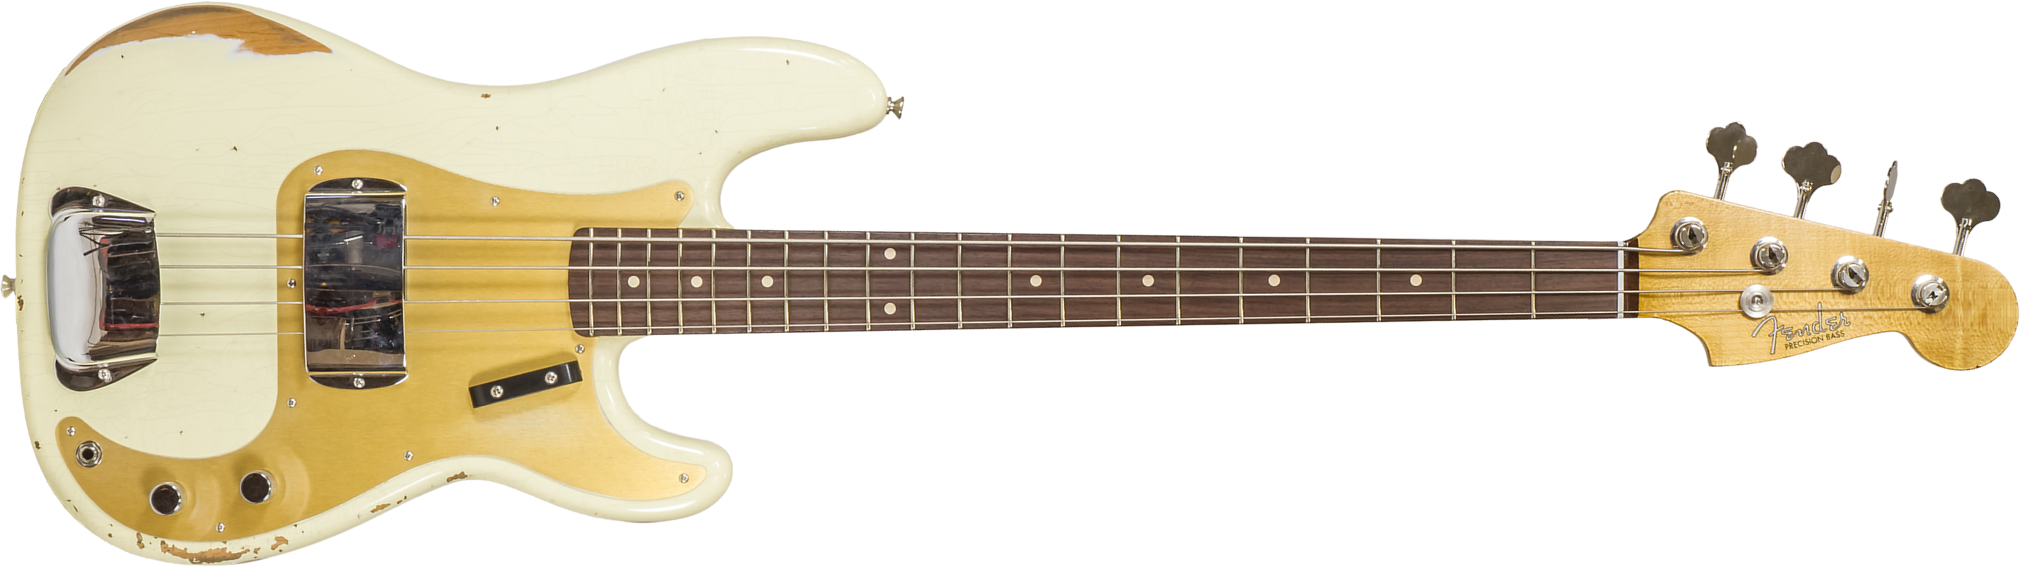 Fender Custom Shop Precision Bass 1960 Rw #r130966 - Closet Classic Vintage White - Solid body elektrische bas - Main picture